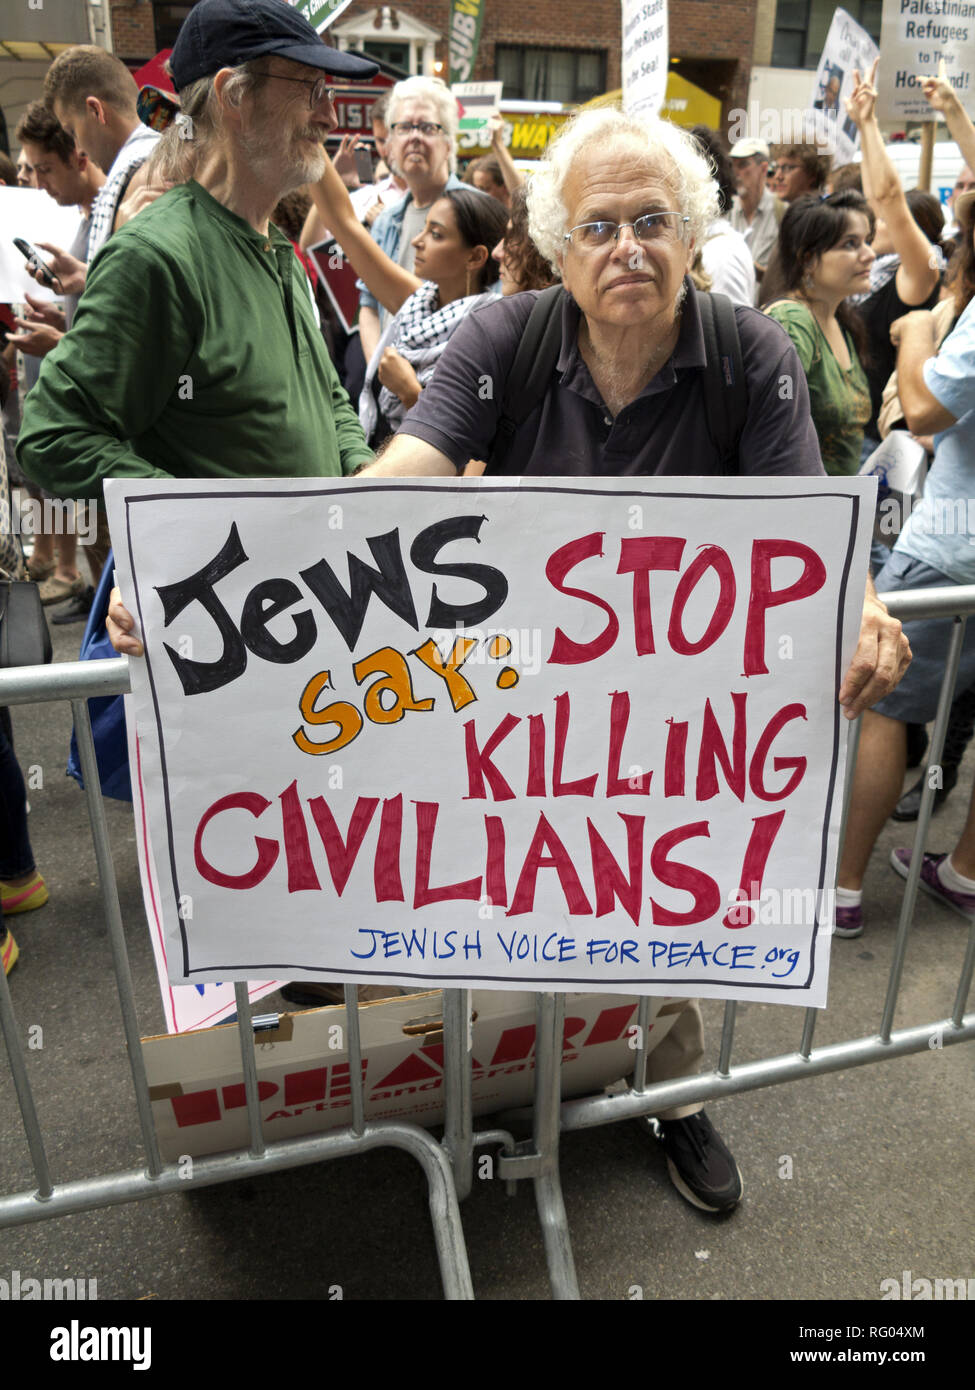 Jewish demonstrator at Pro-Palestinian rally near Columbus Circle in NYC during Israeli-Palestinian crisis, Aug.1, 2014. Stock Photo